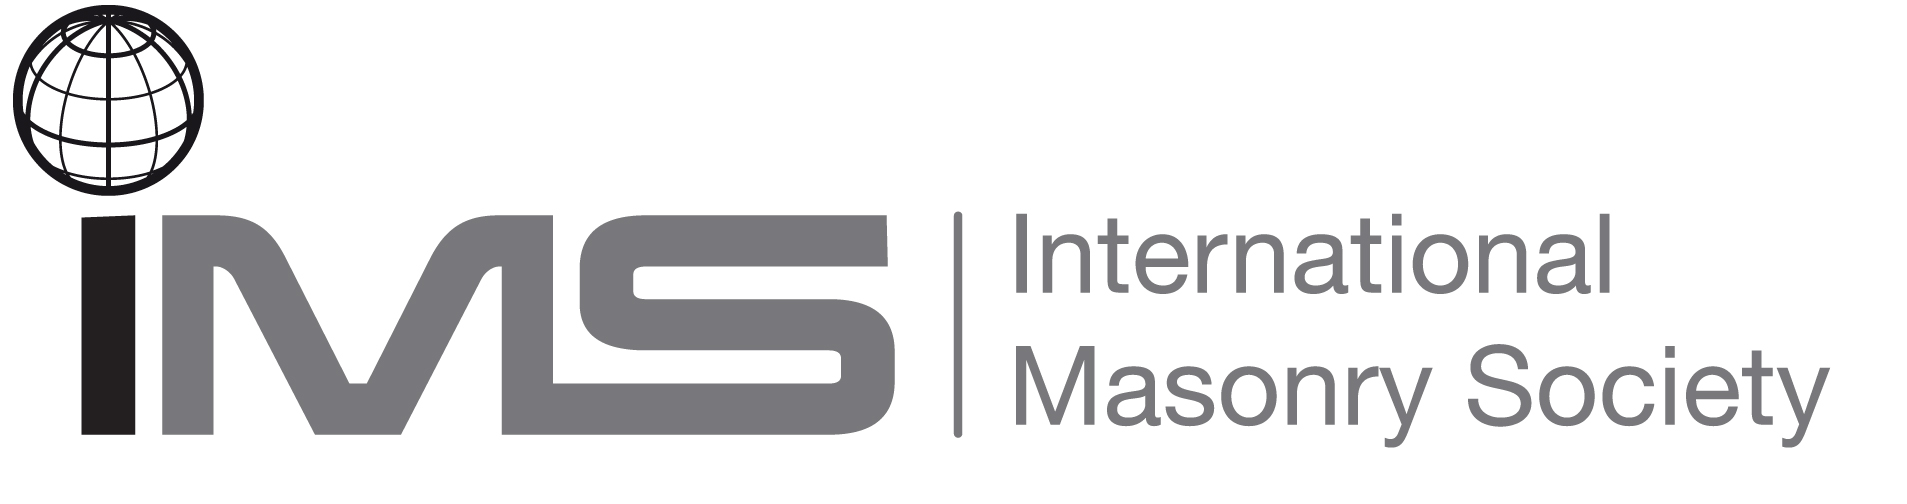 The International Masonry Society